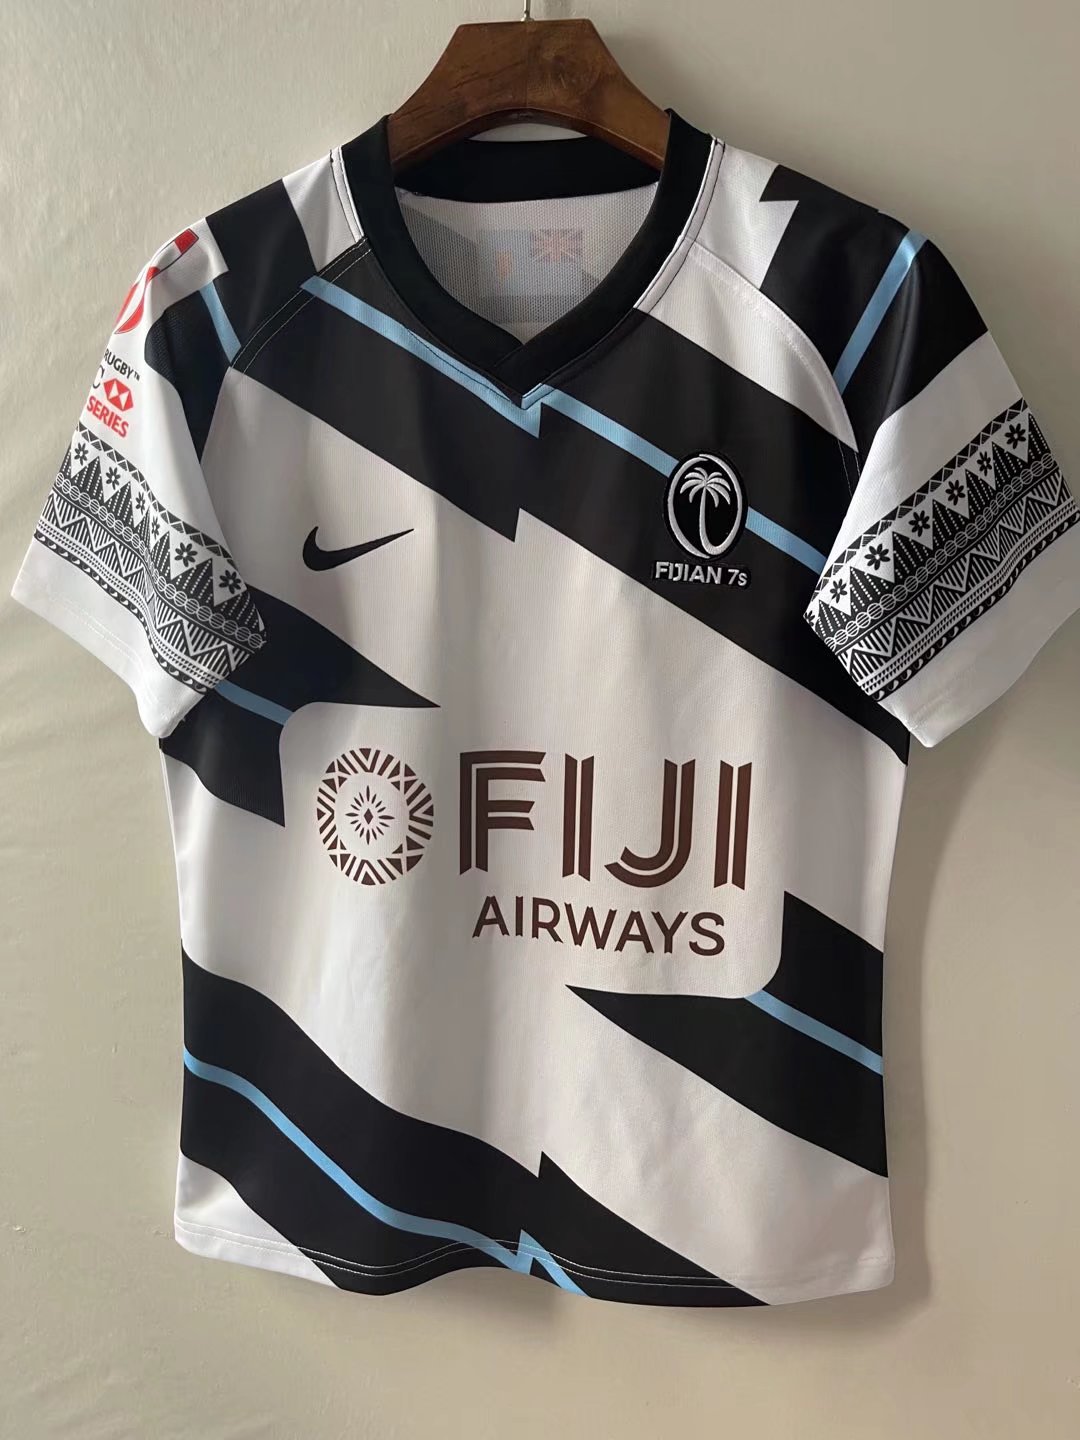 2020-2021 Fiji Black & White Thailand Rugby Shirts-805